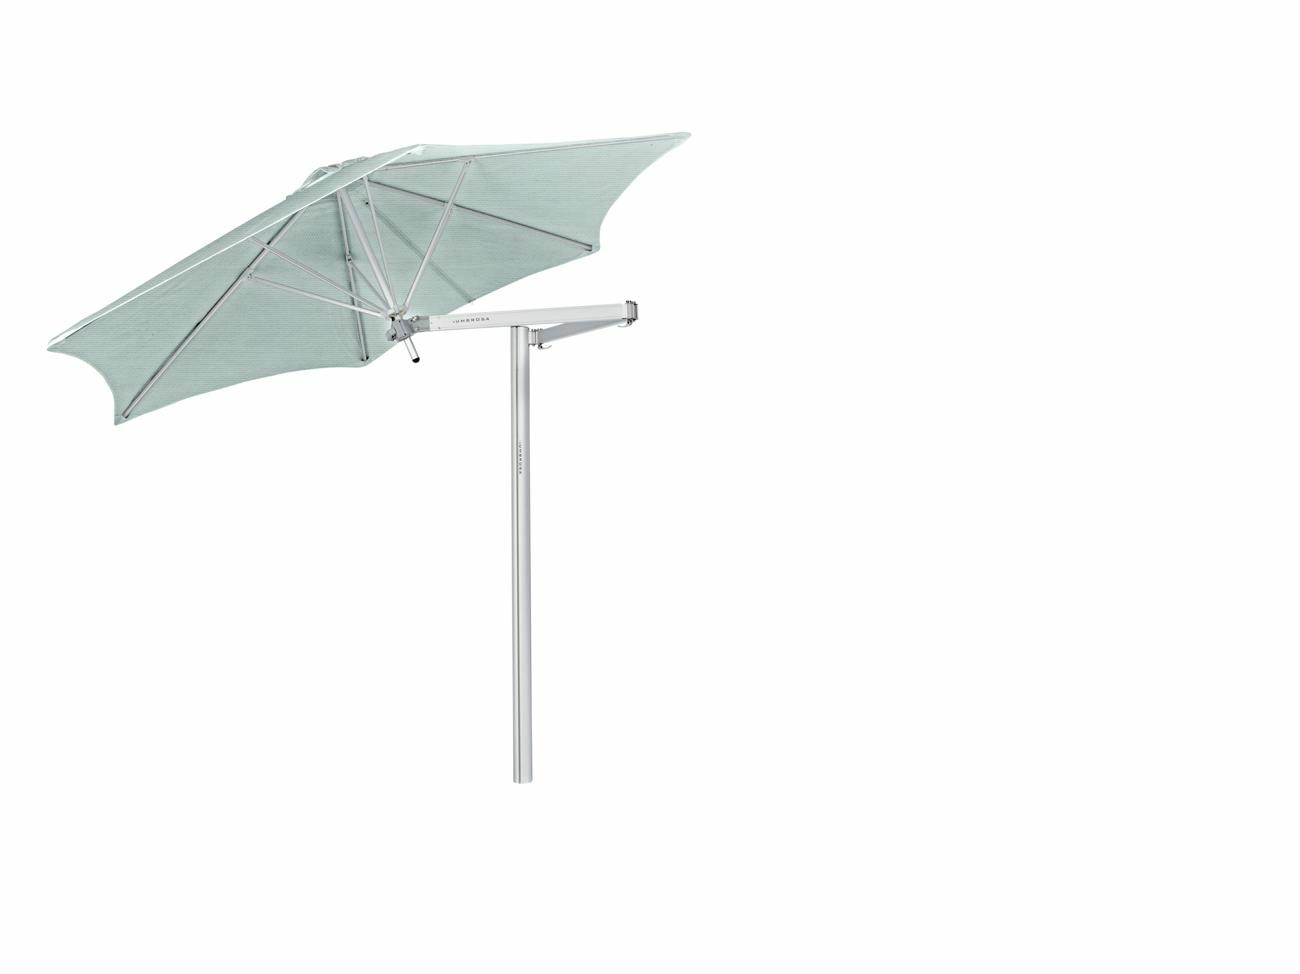 Paraflex cantilever umbrella round 2,7 m with Curacao fabric and a Classic arm